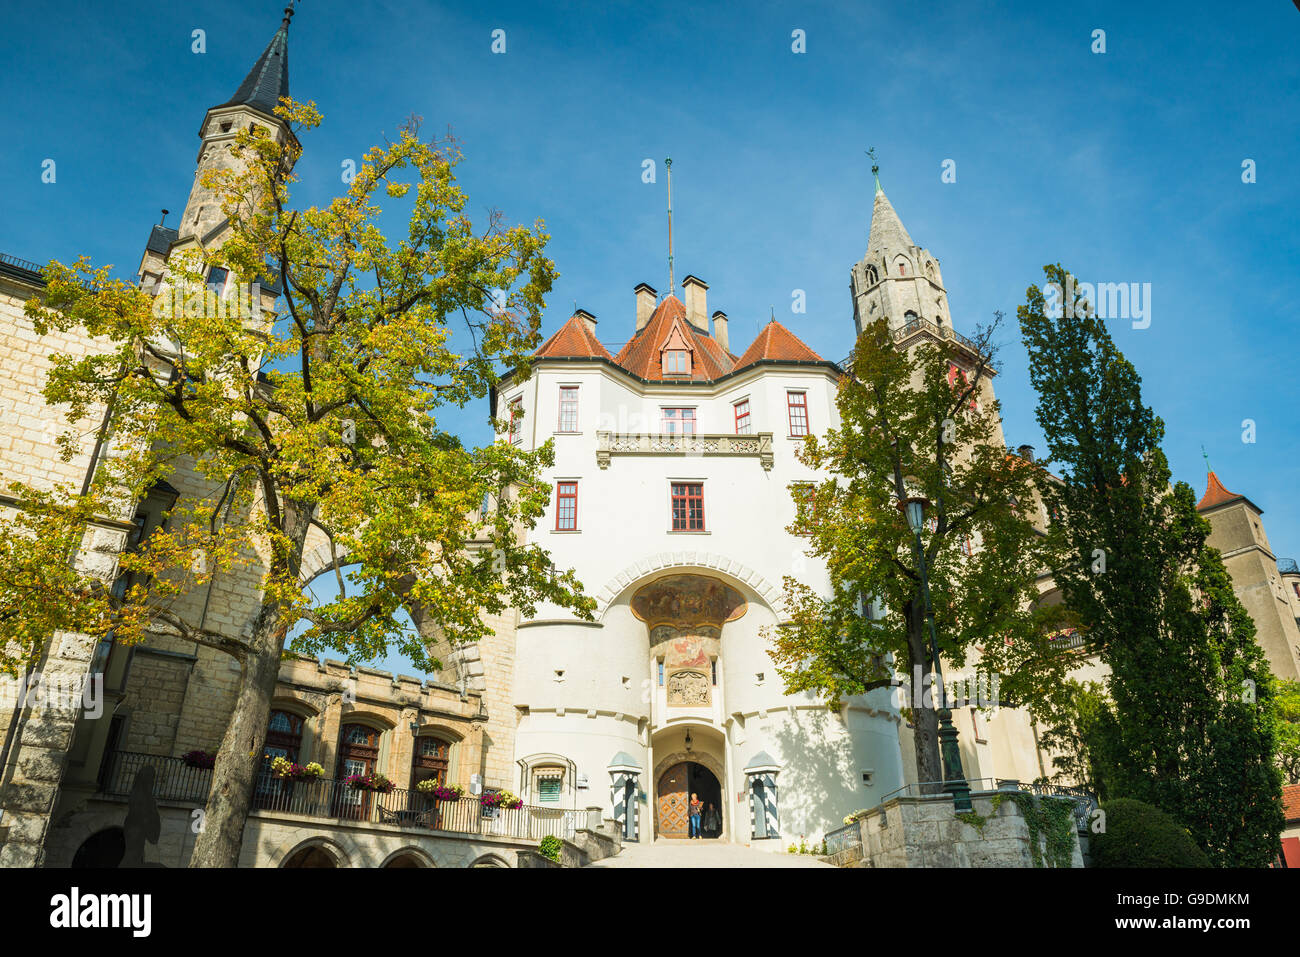 Ingresso al castello di Sigmaringen, Germania Foto Stock